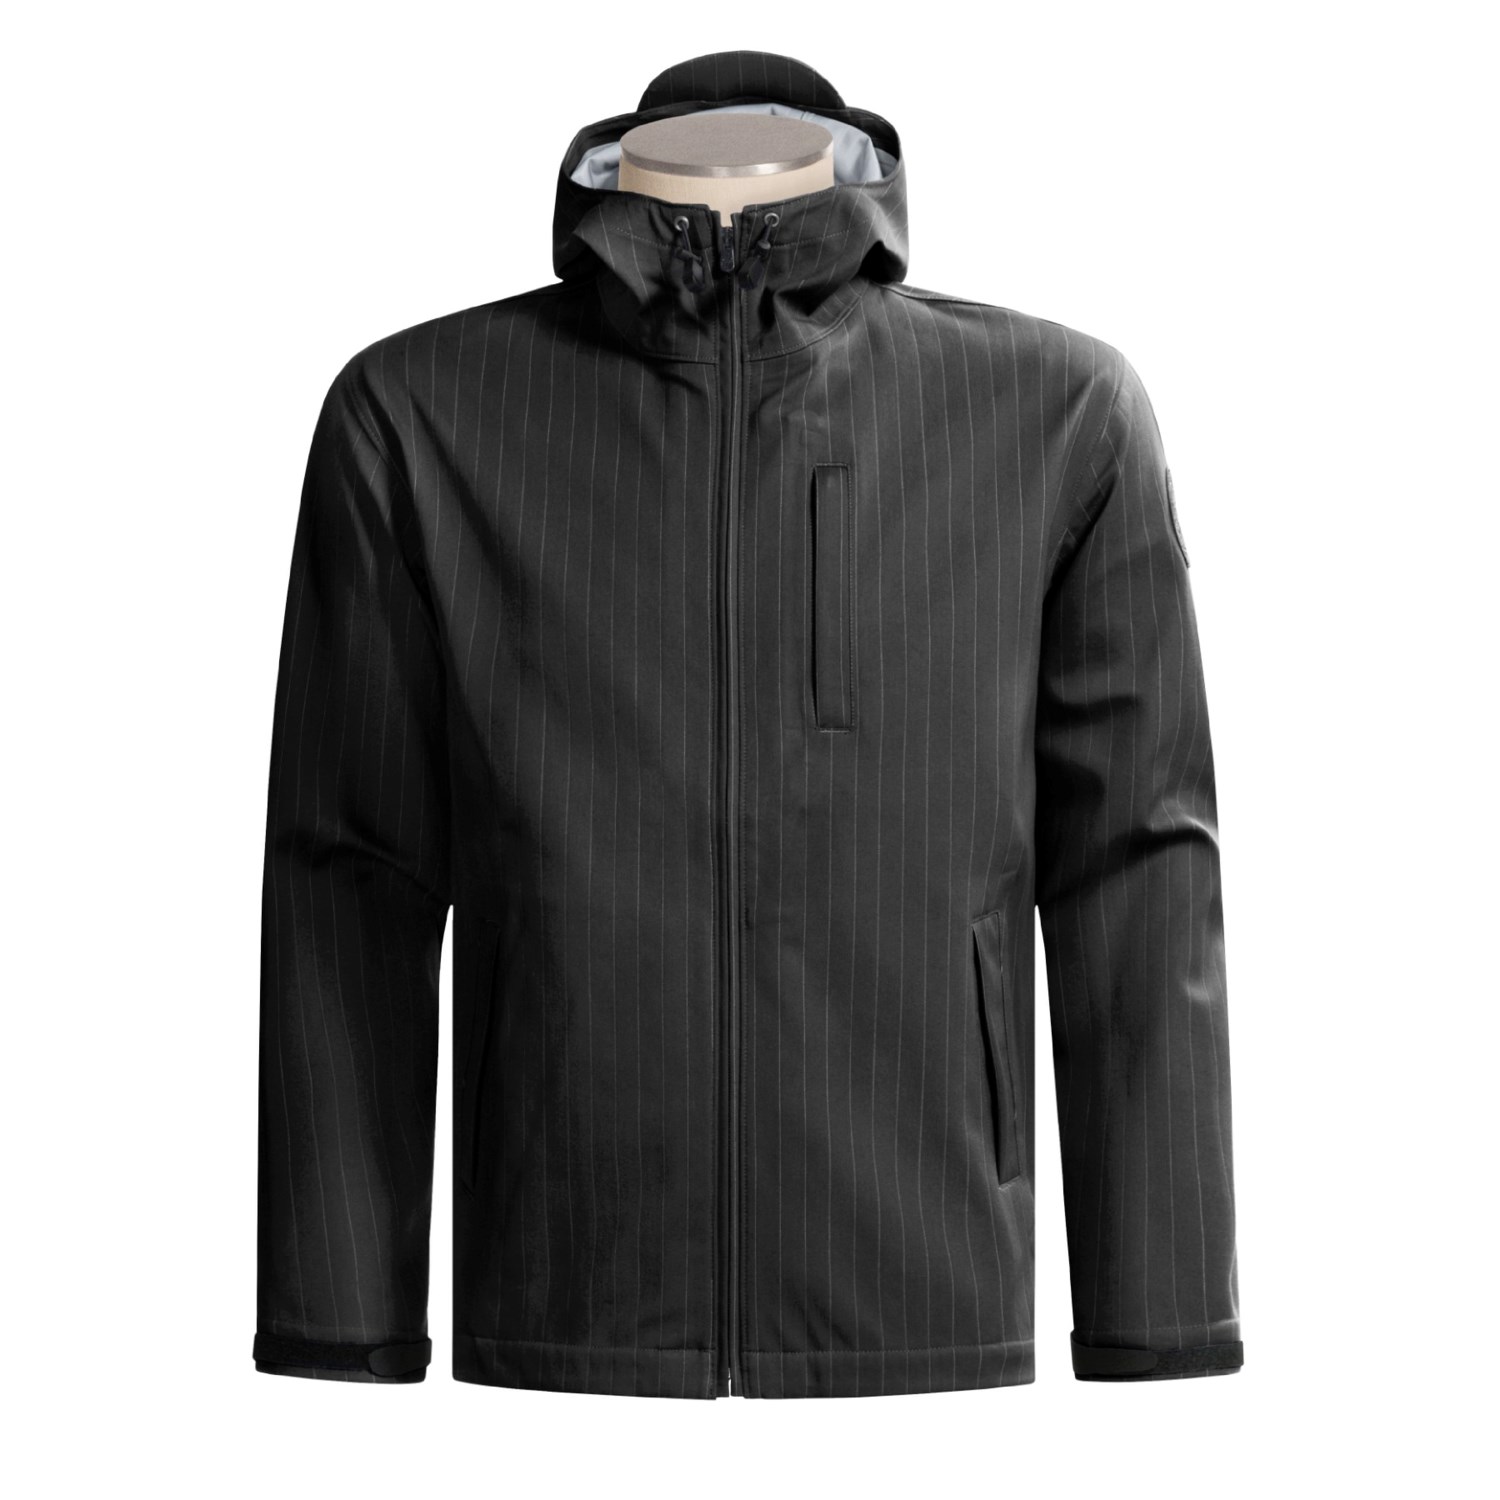 Canada Goose vest sale official - Canada Goose Dorval Anorak Jacket (For Men) 1573X - Save 35%